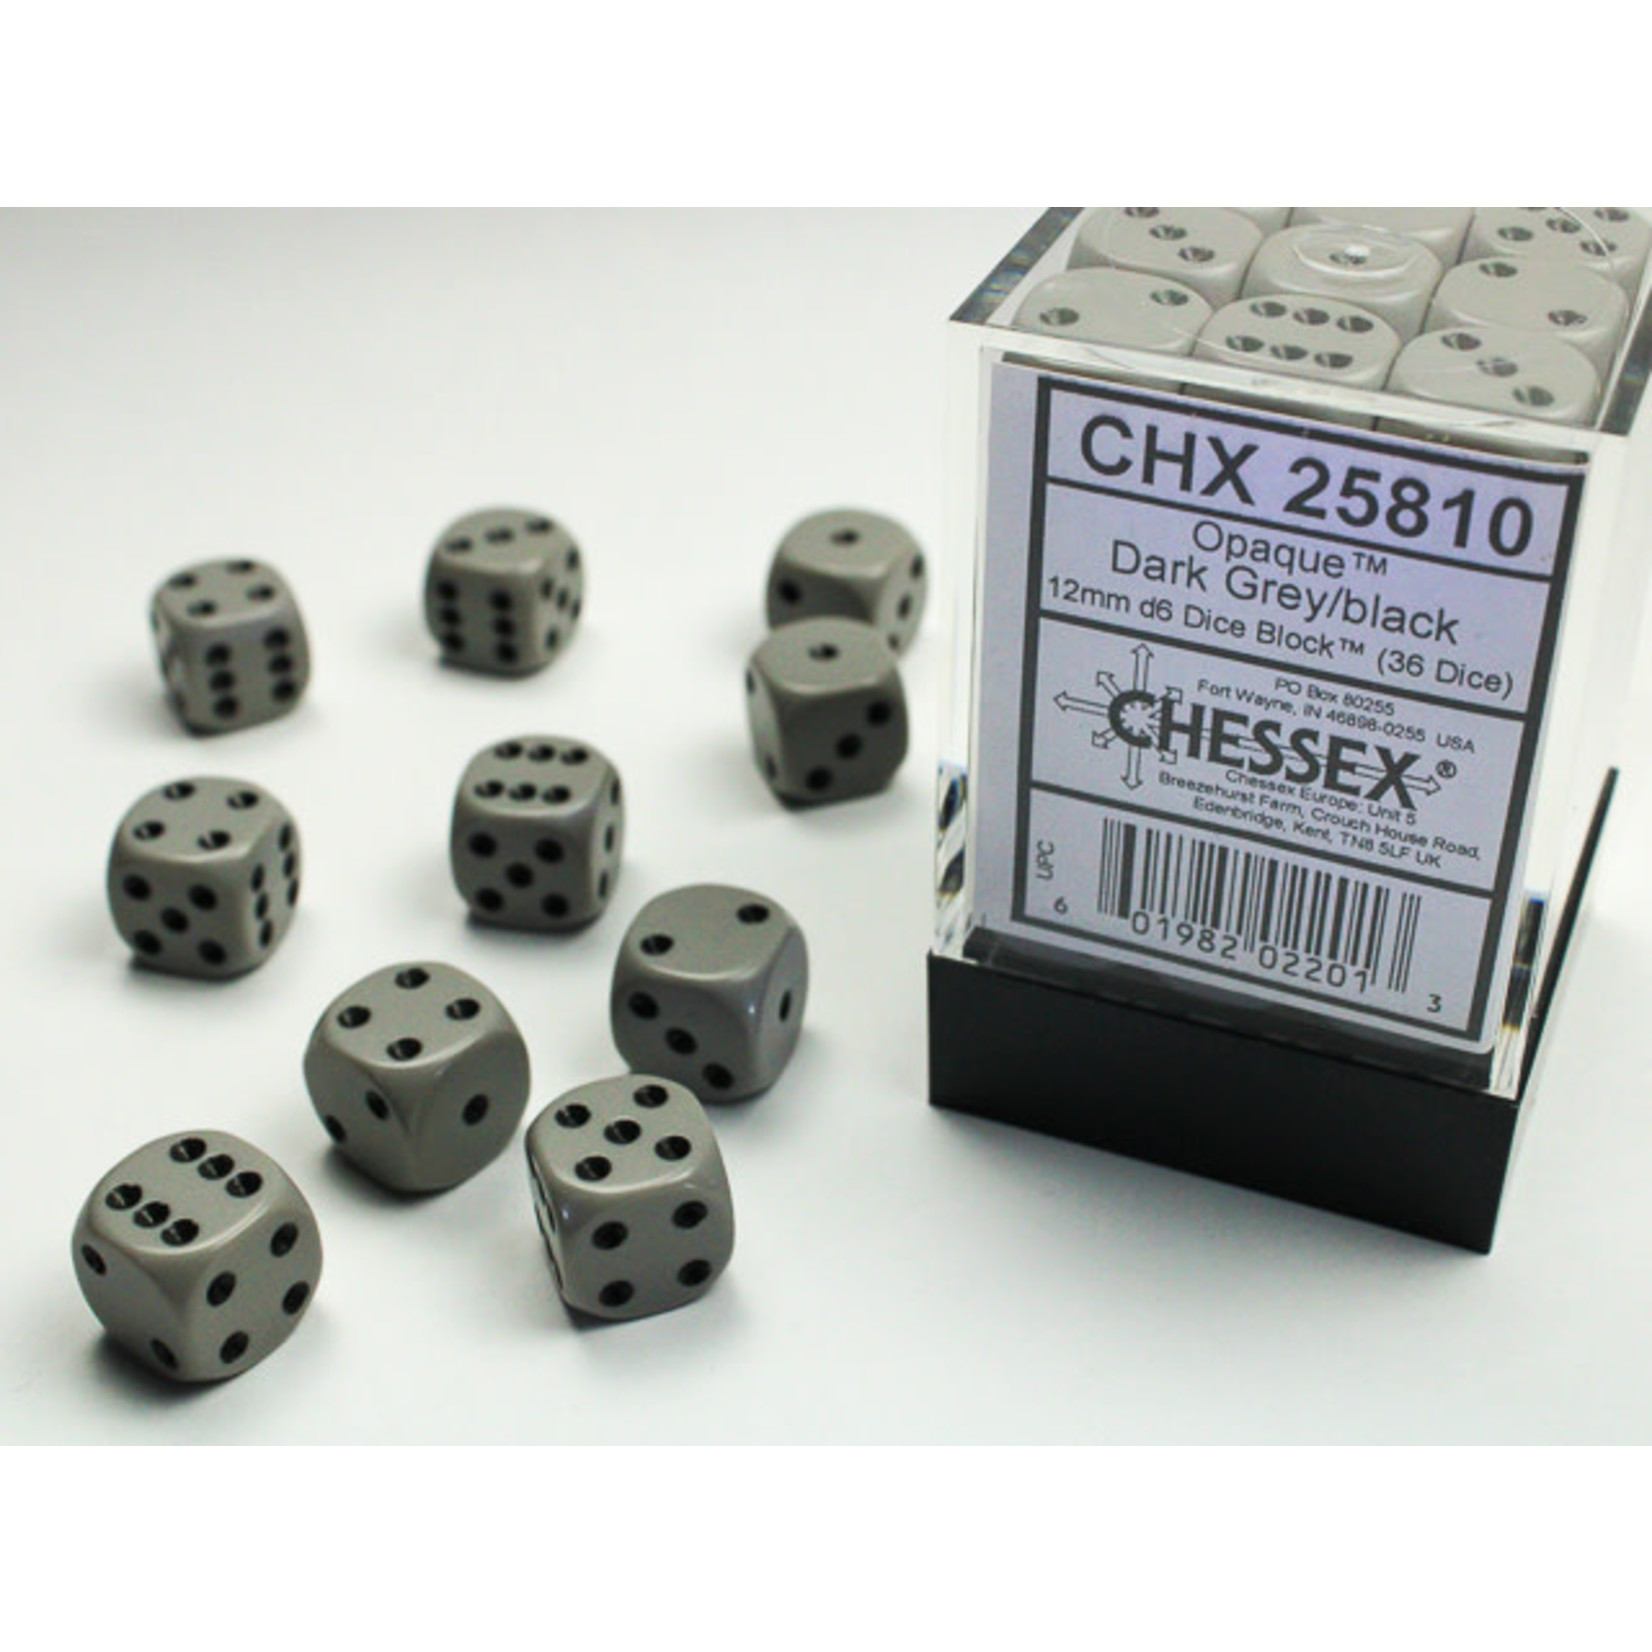 Chessex ***Dice 12mm 25810 36pc Opaque Grey/Black